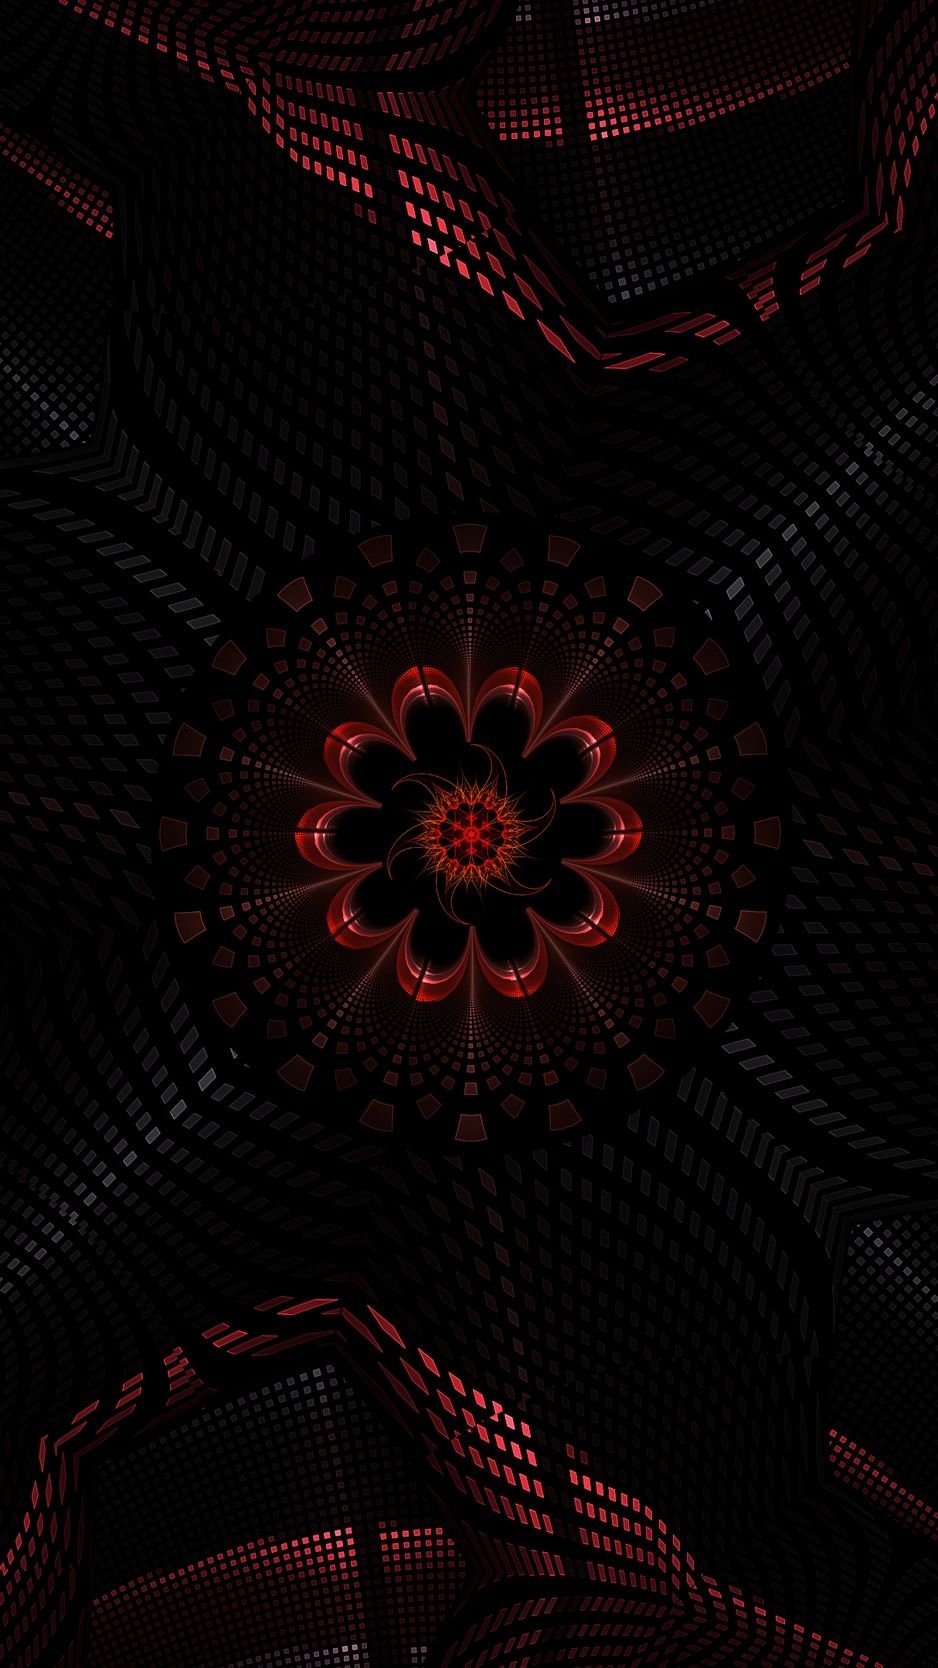 176600 wallpaper fractal dark abstraction black red iphone black